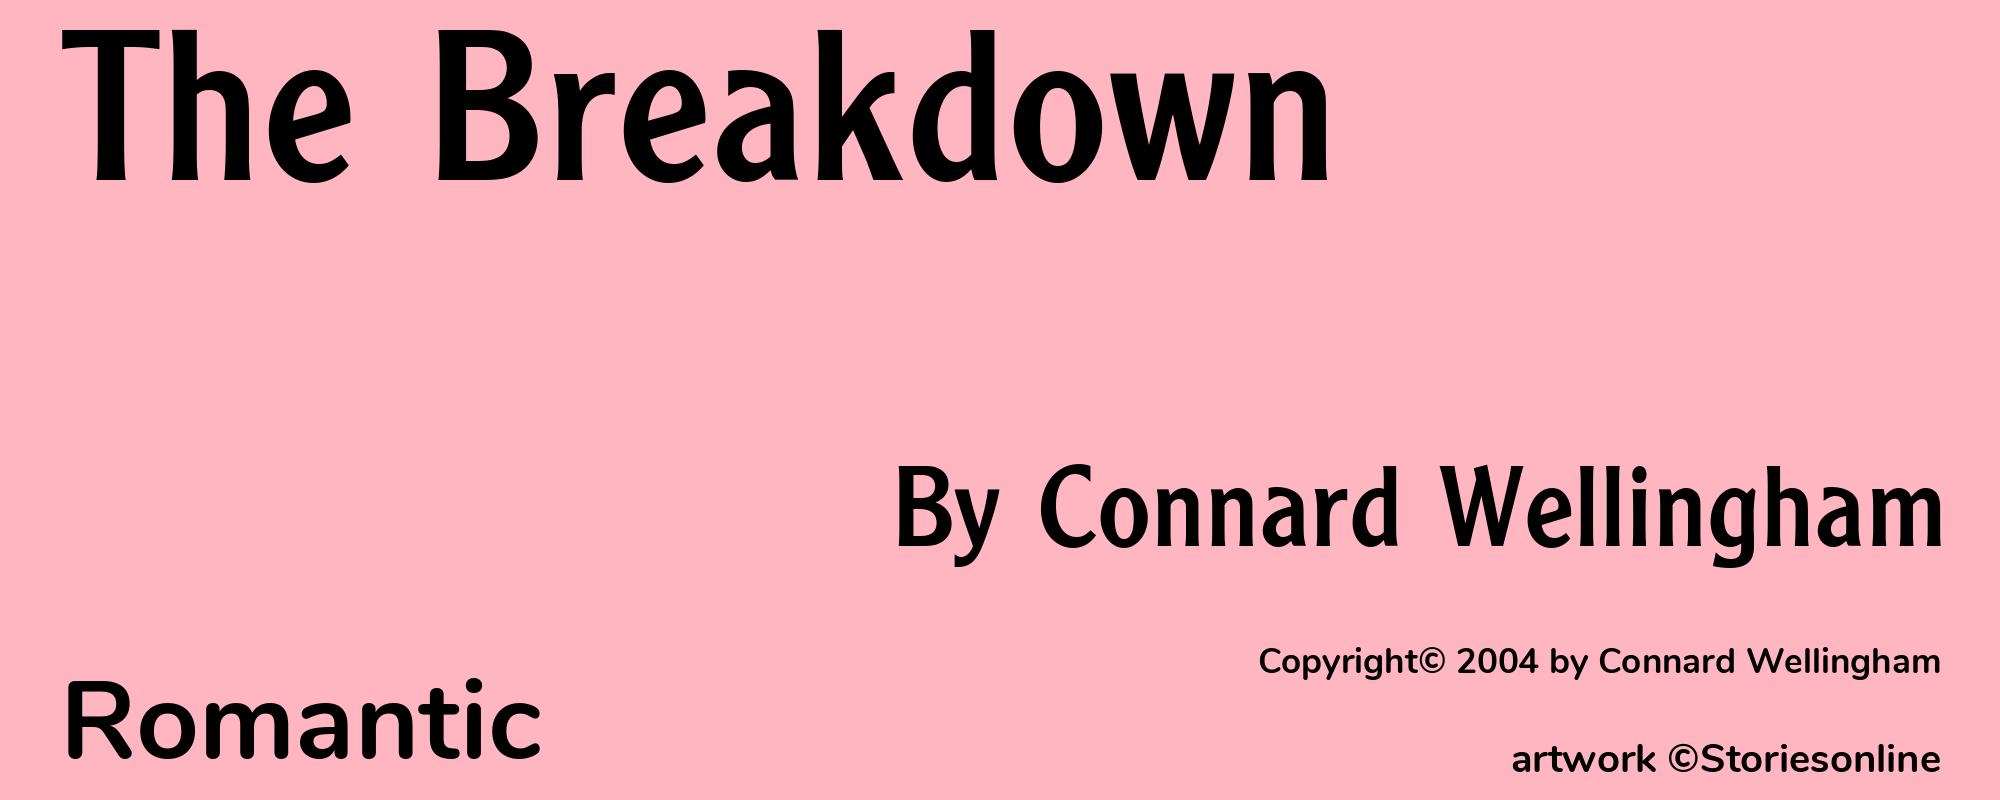 The Breakdown - Cover